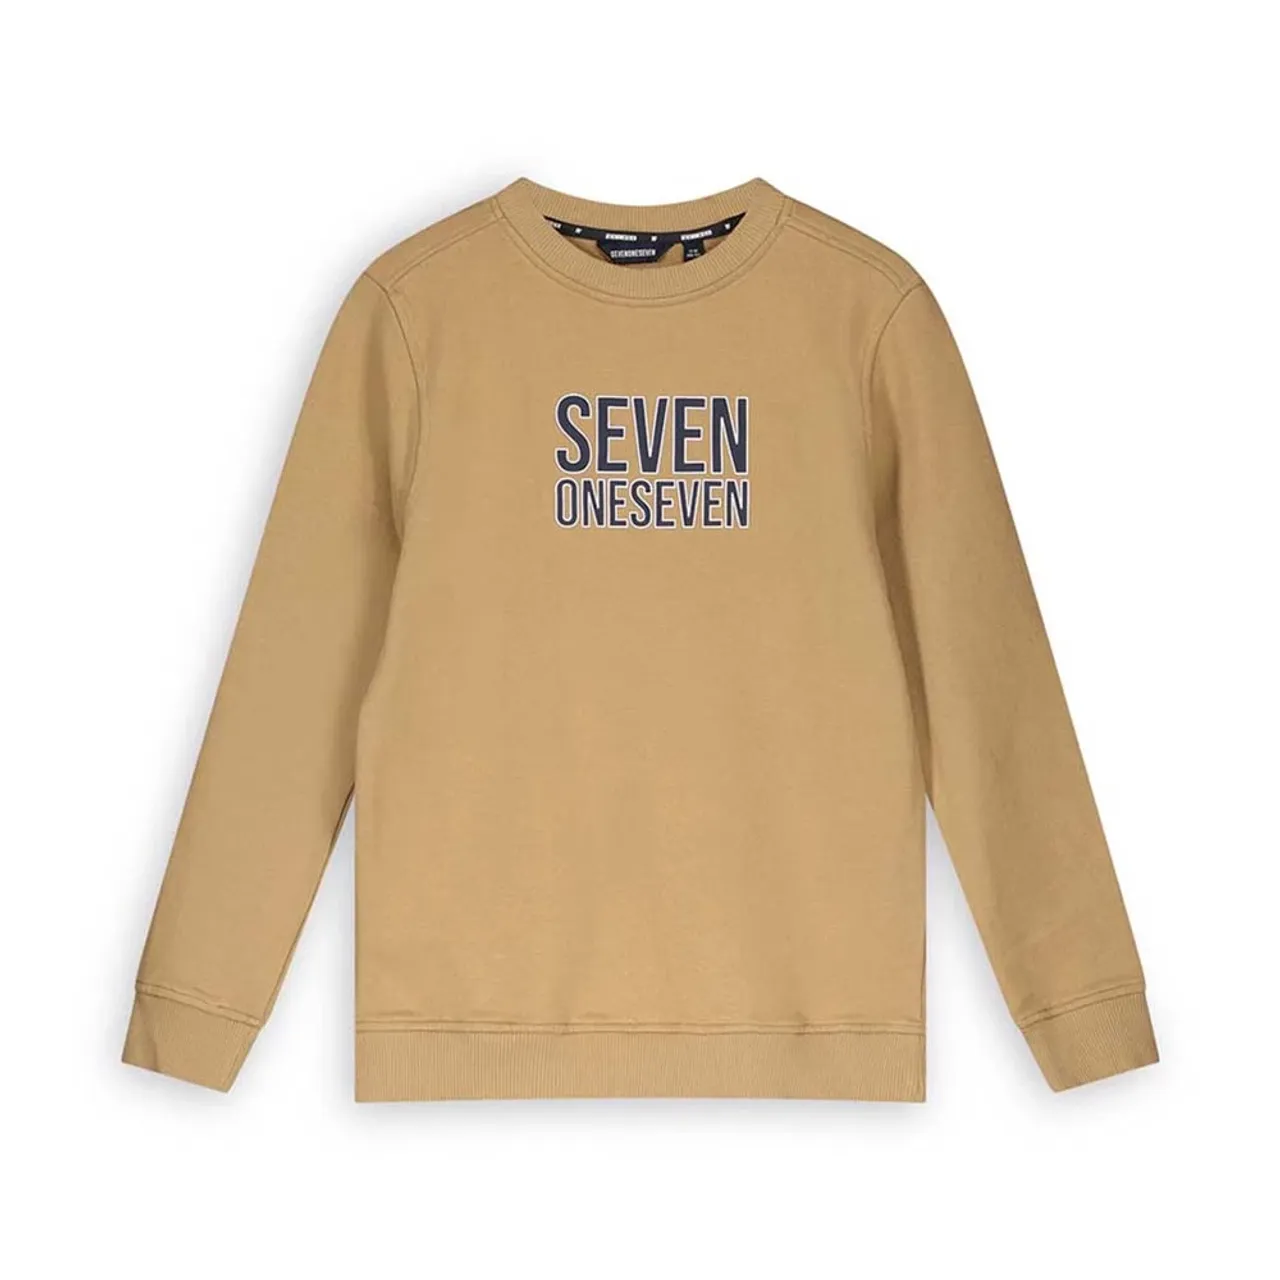 Sevenoneseven jongens sweater